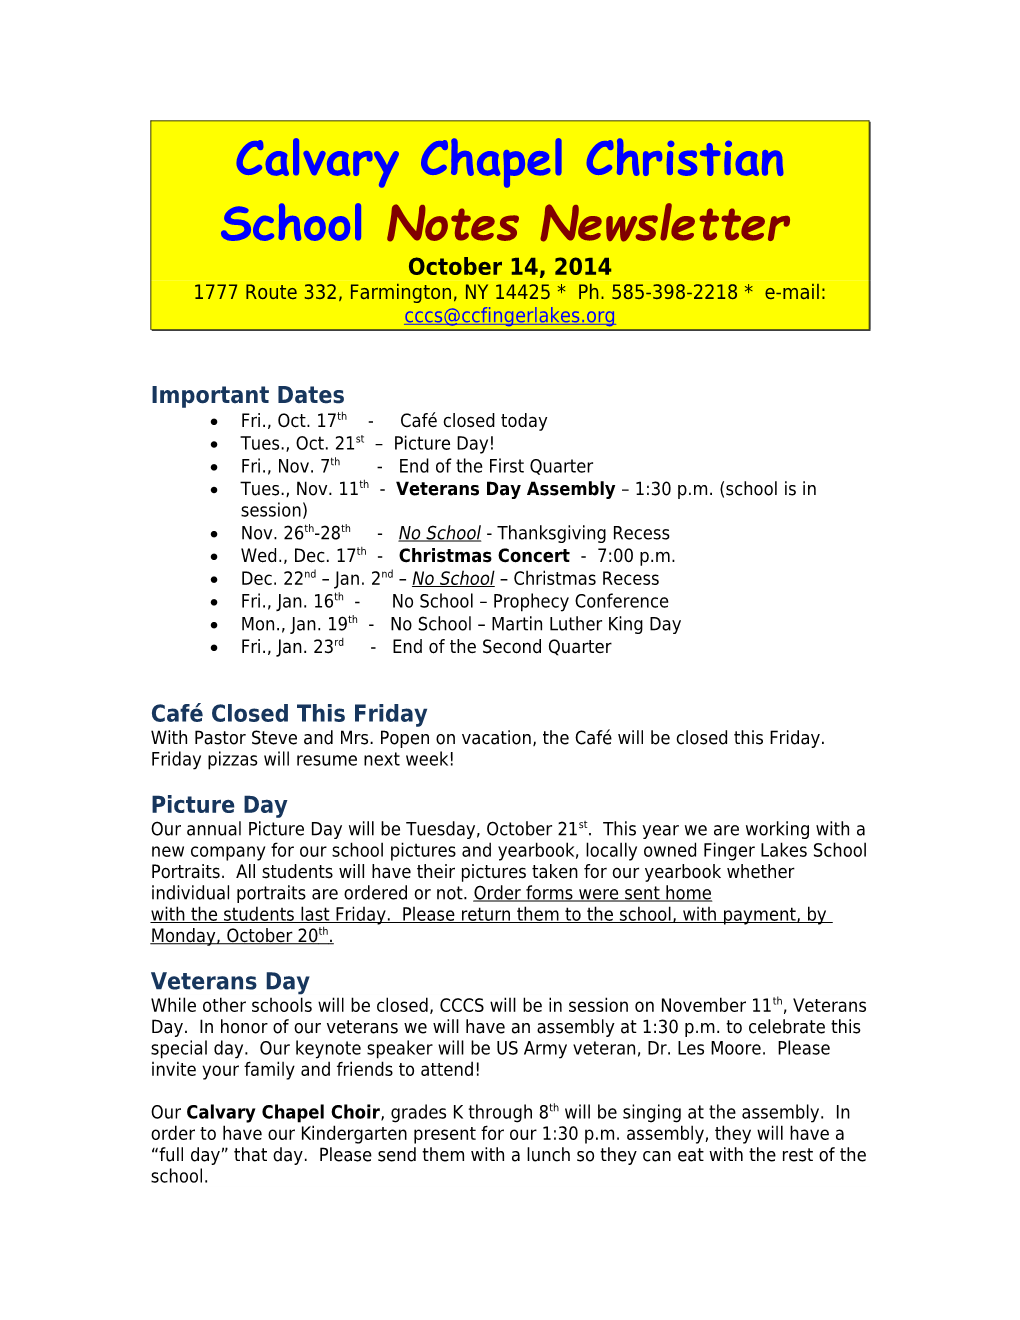 Calvary Chapel Christian Schoolnotes Newsletter